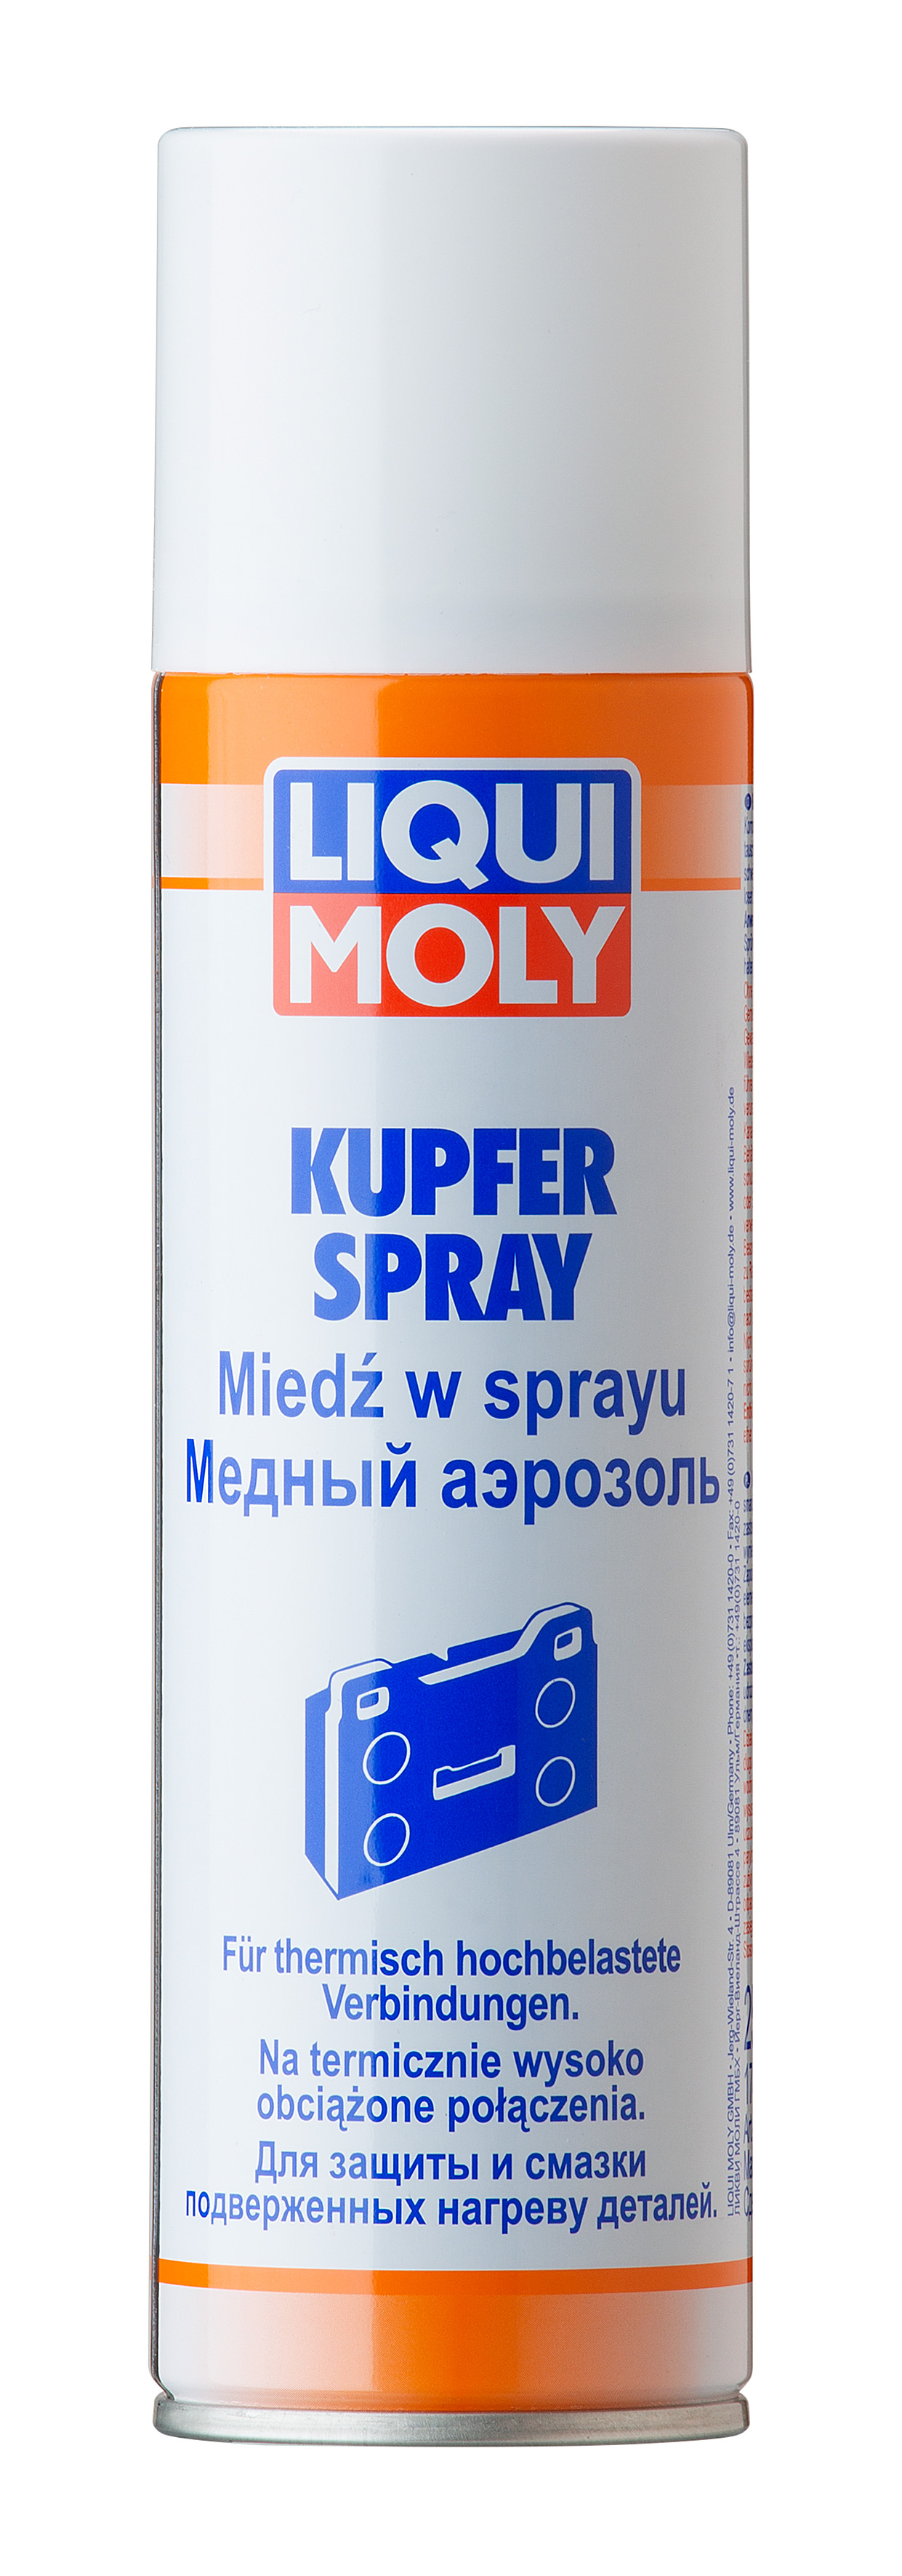 LIQUI MOLY Kupfer-Spray (0,25 литра)